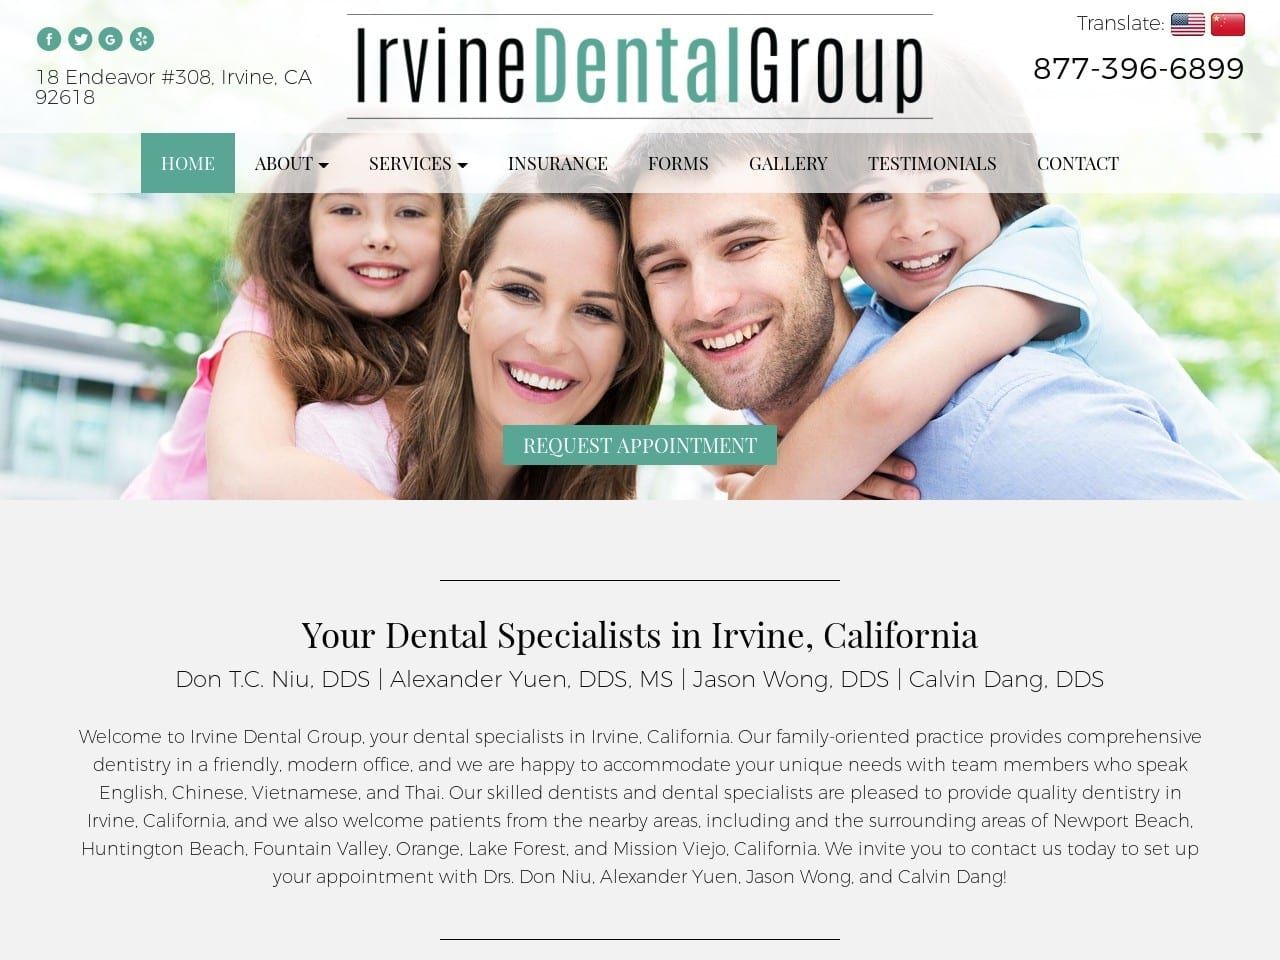 Irvine Dental Group Website Screenshot from irvinedentalgroup.net